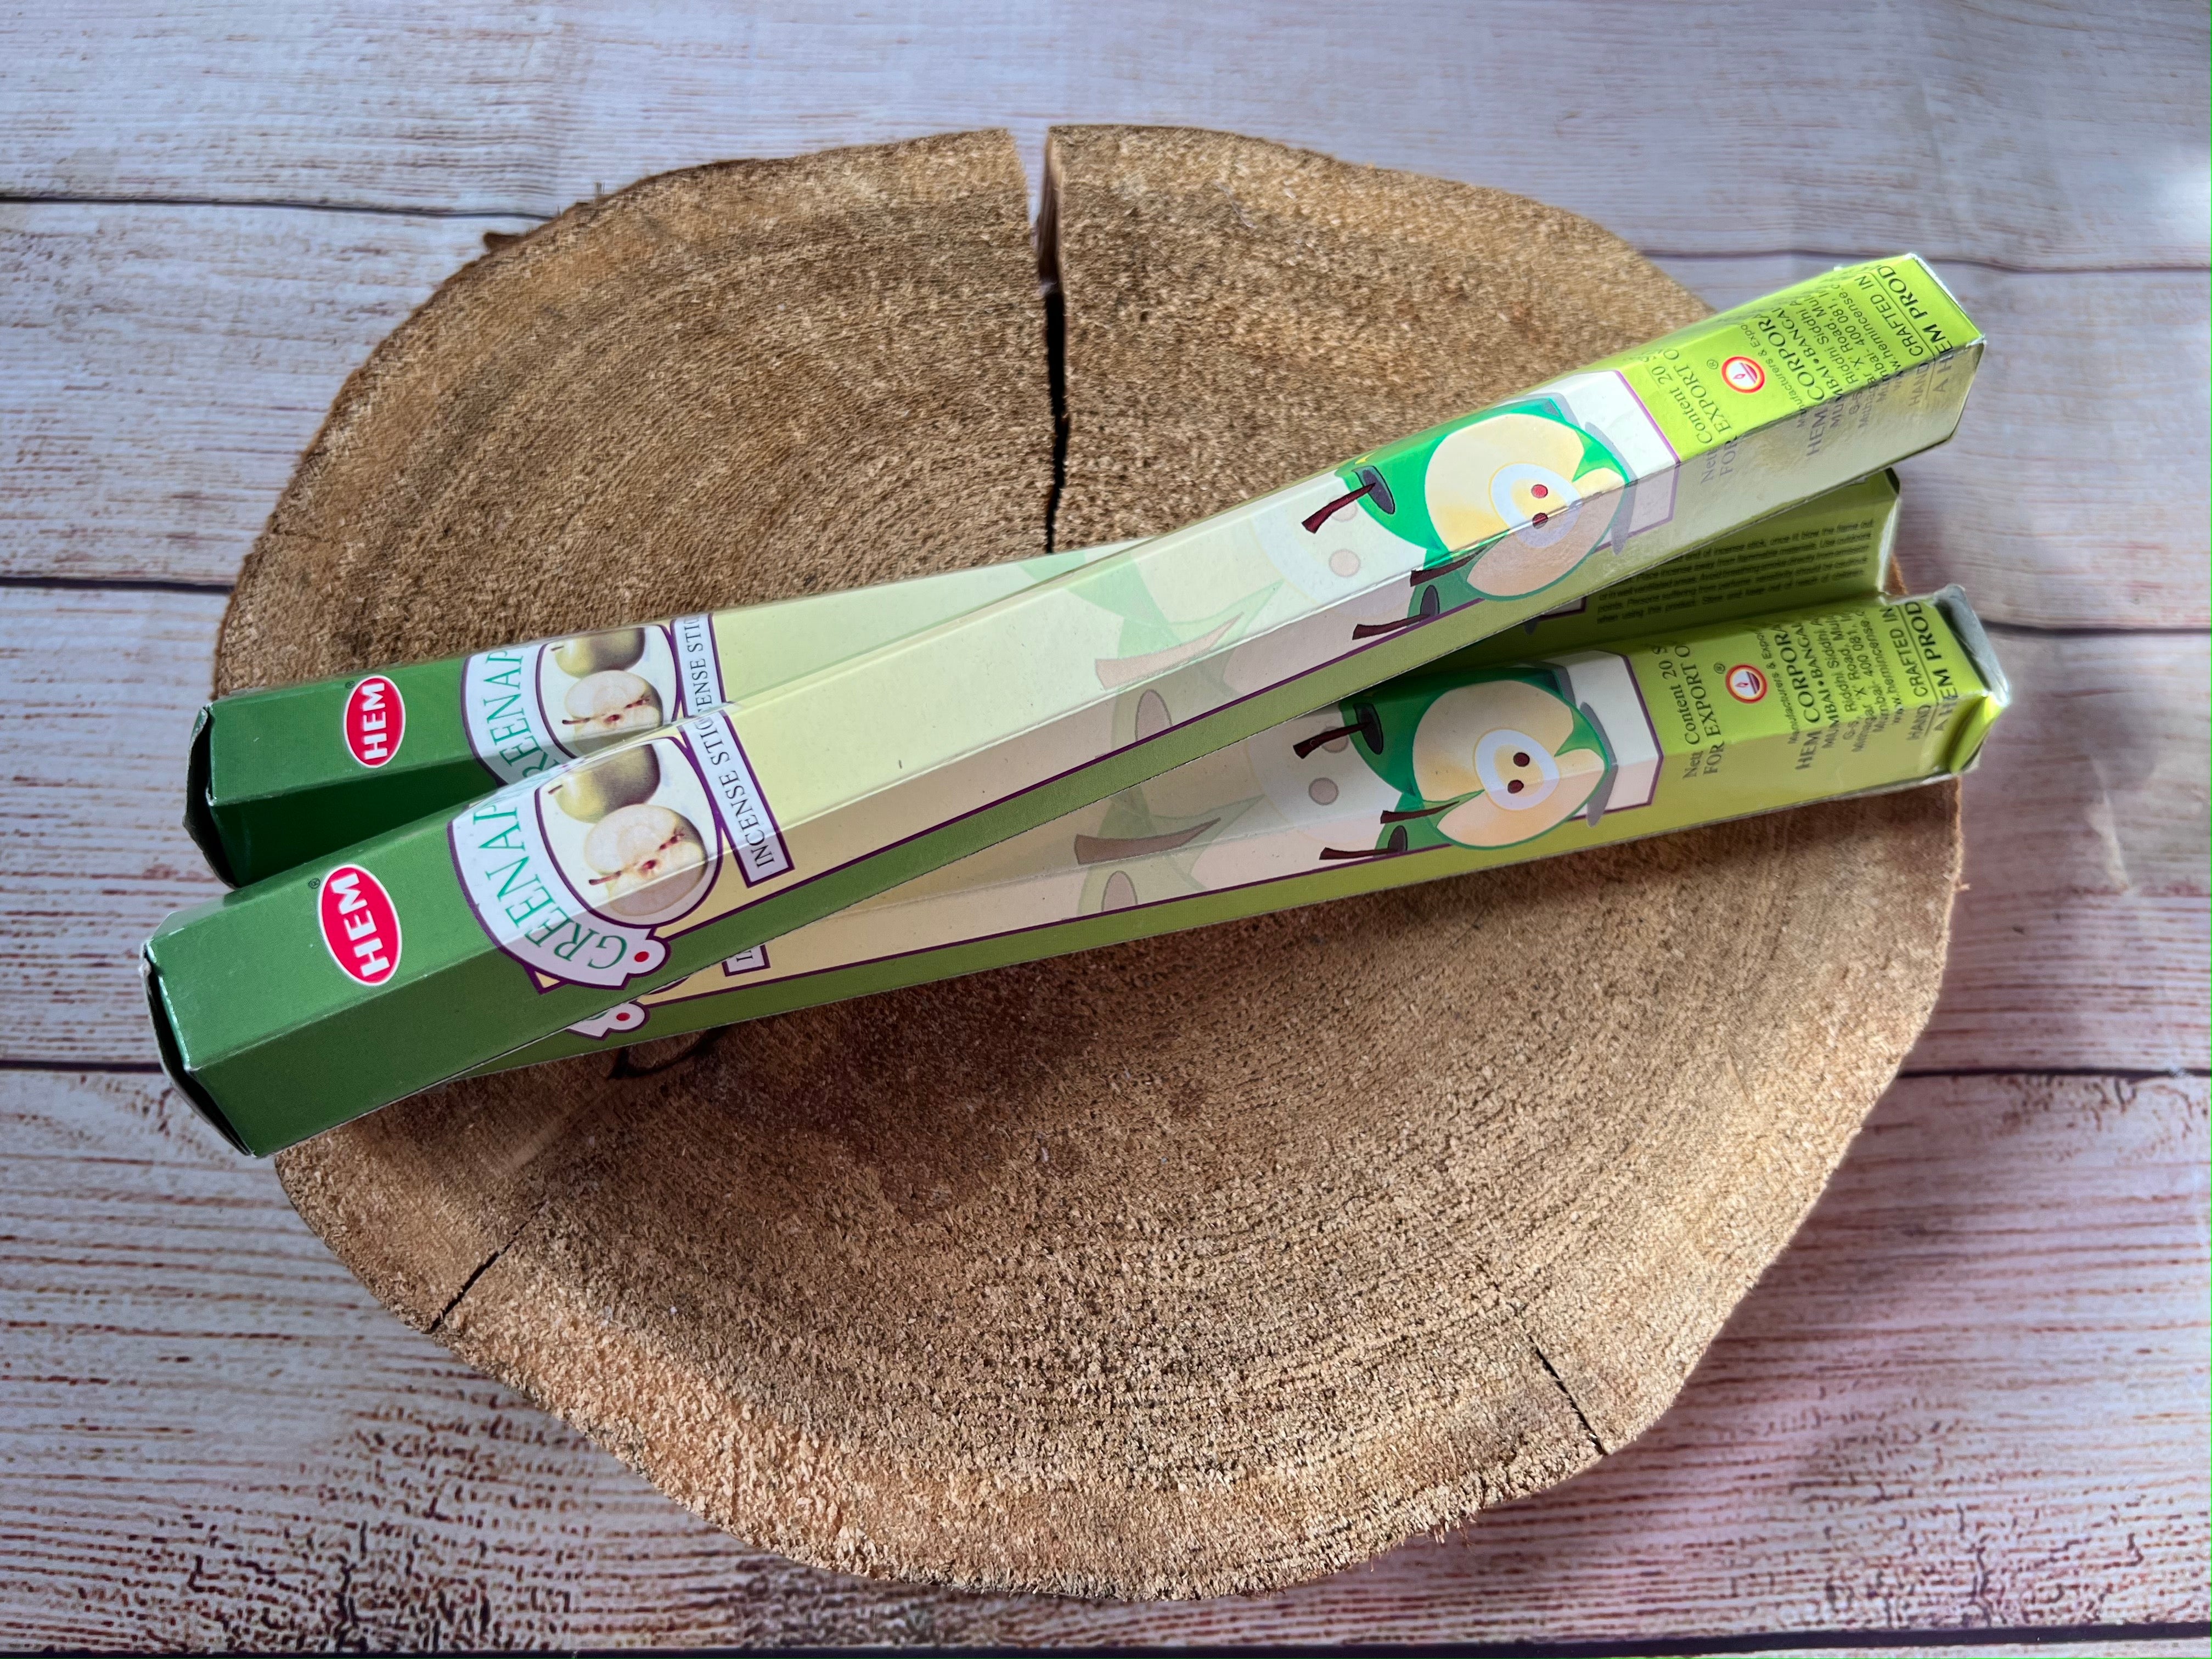 Green Apple Incense Sticks